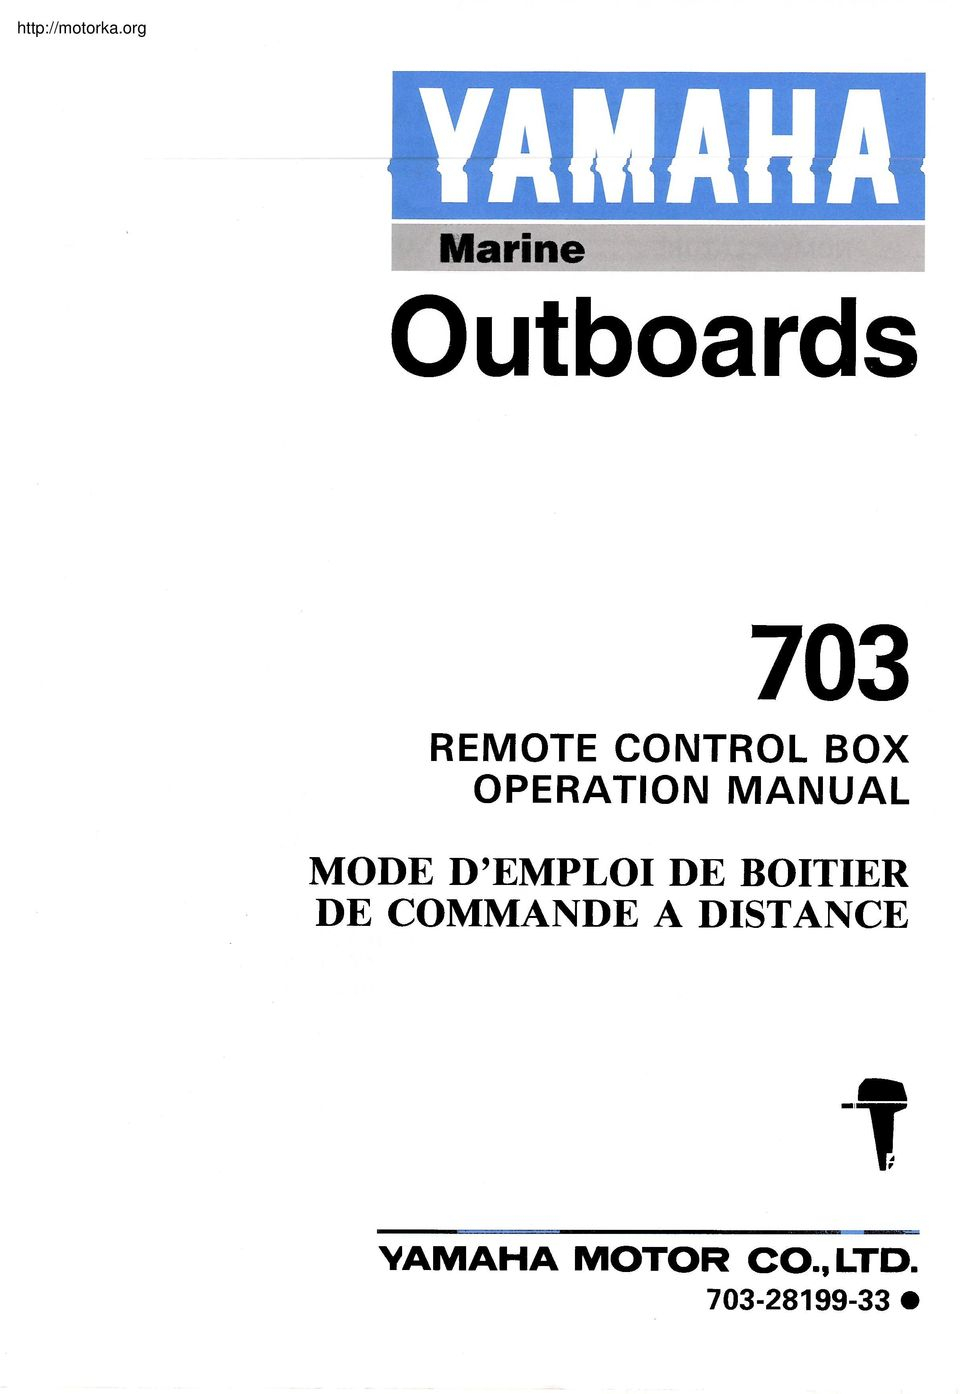 Mode D'emploi De Boitier De Commande A Distance. Marine Outboards - Yamaha 703 Remote Control Wiring Diagram